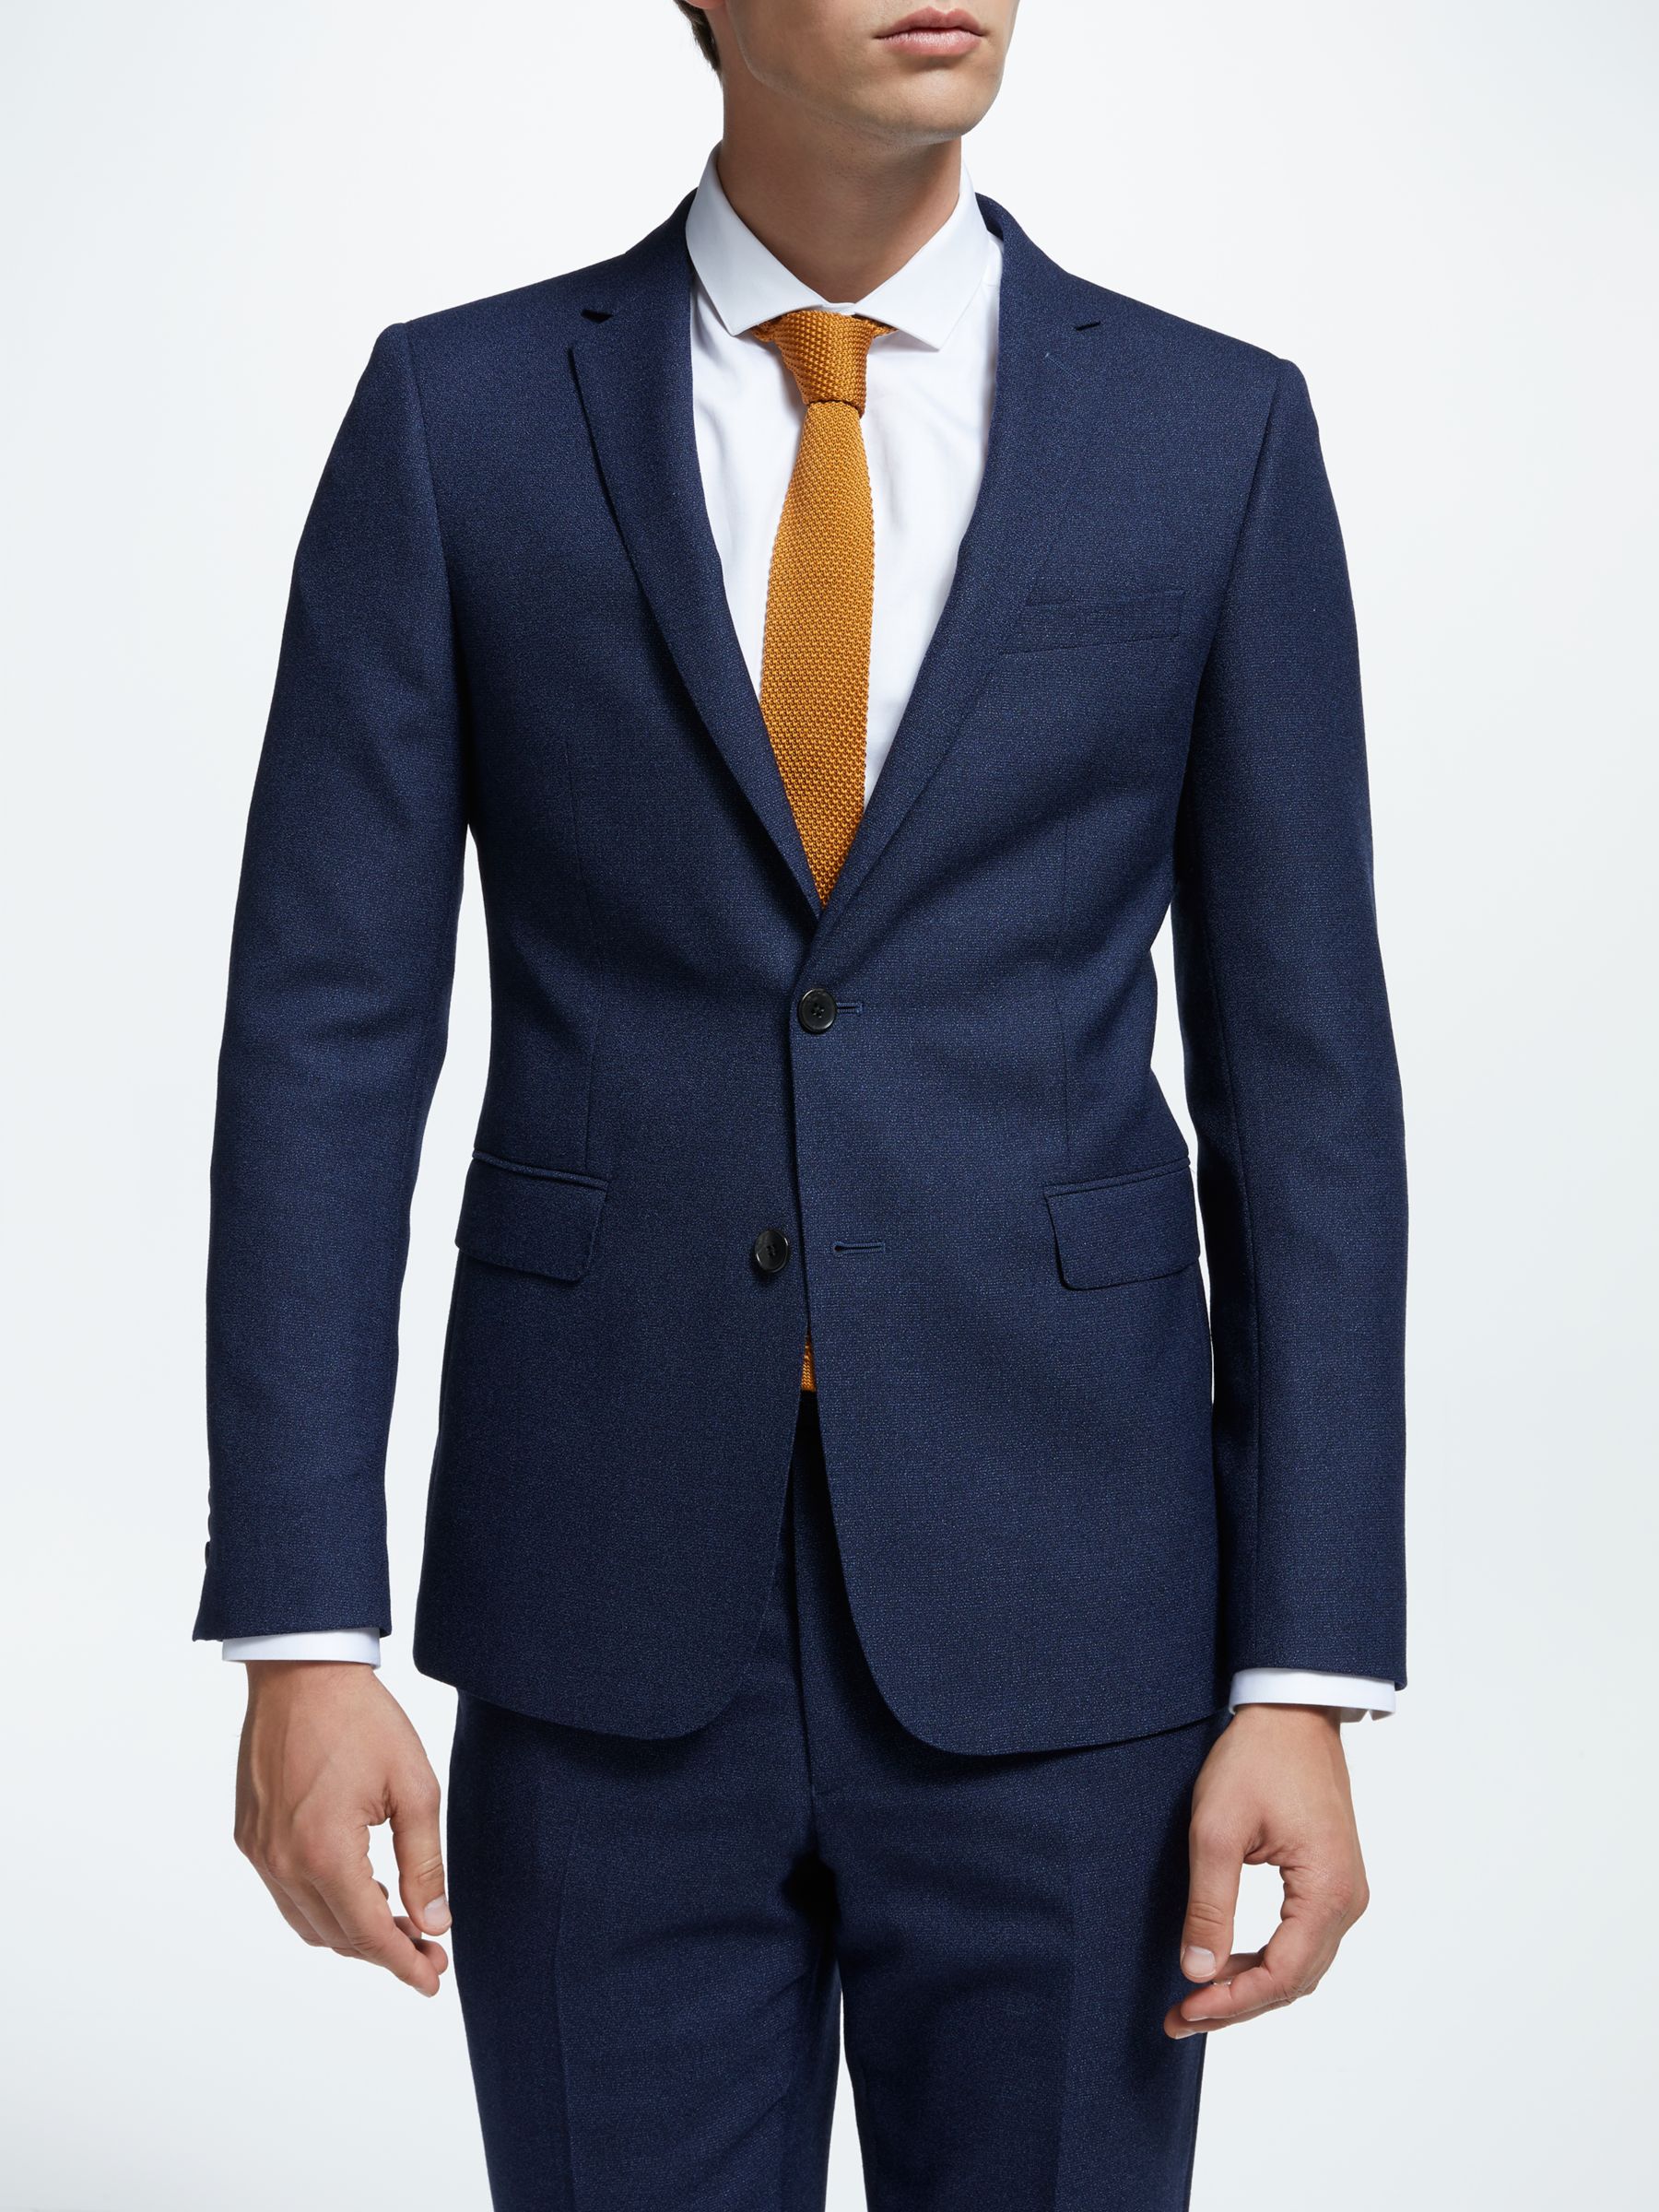 Kin Milled Semi Plain Slim Fit Suit Jacket, Blue